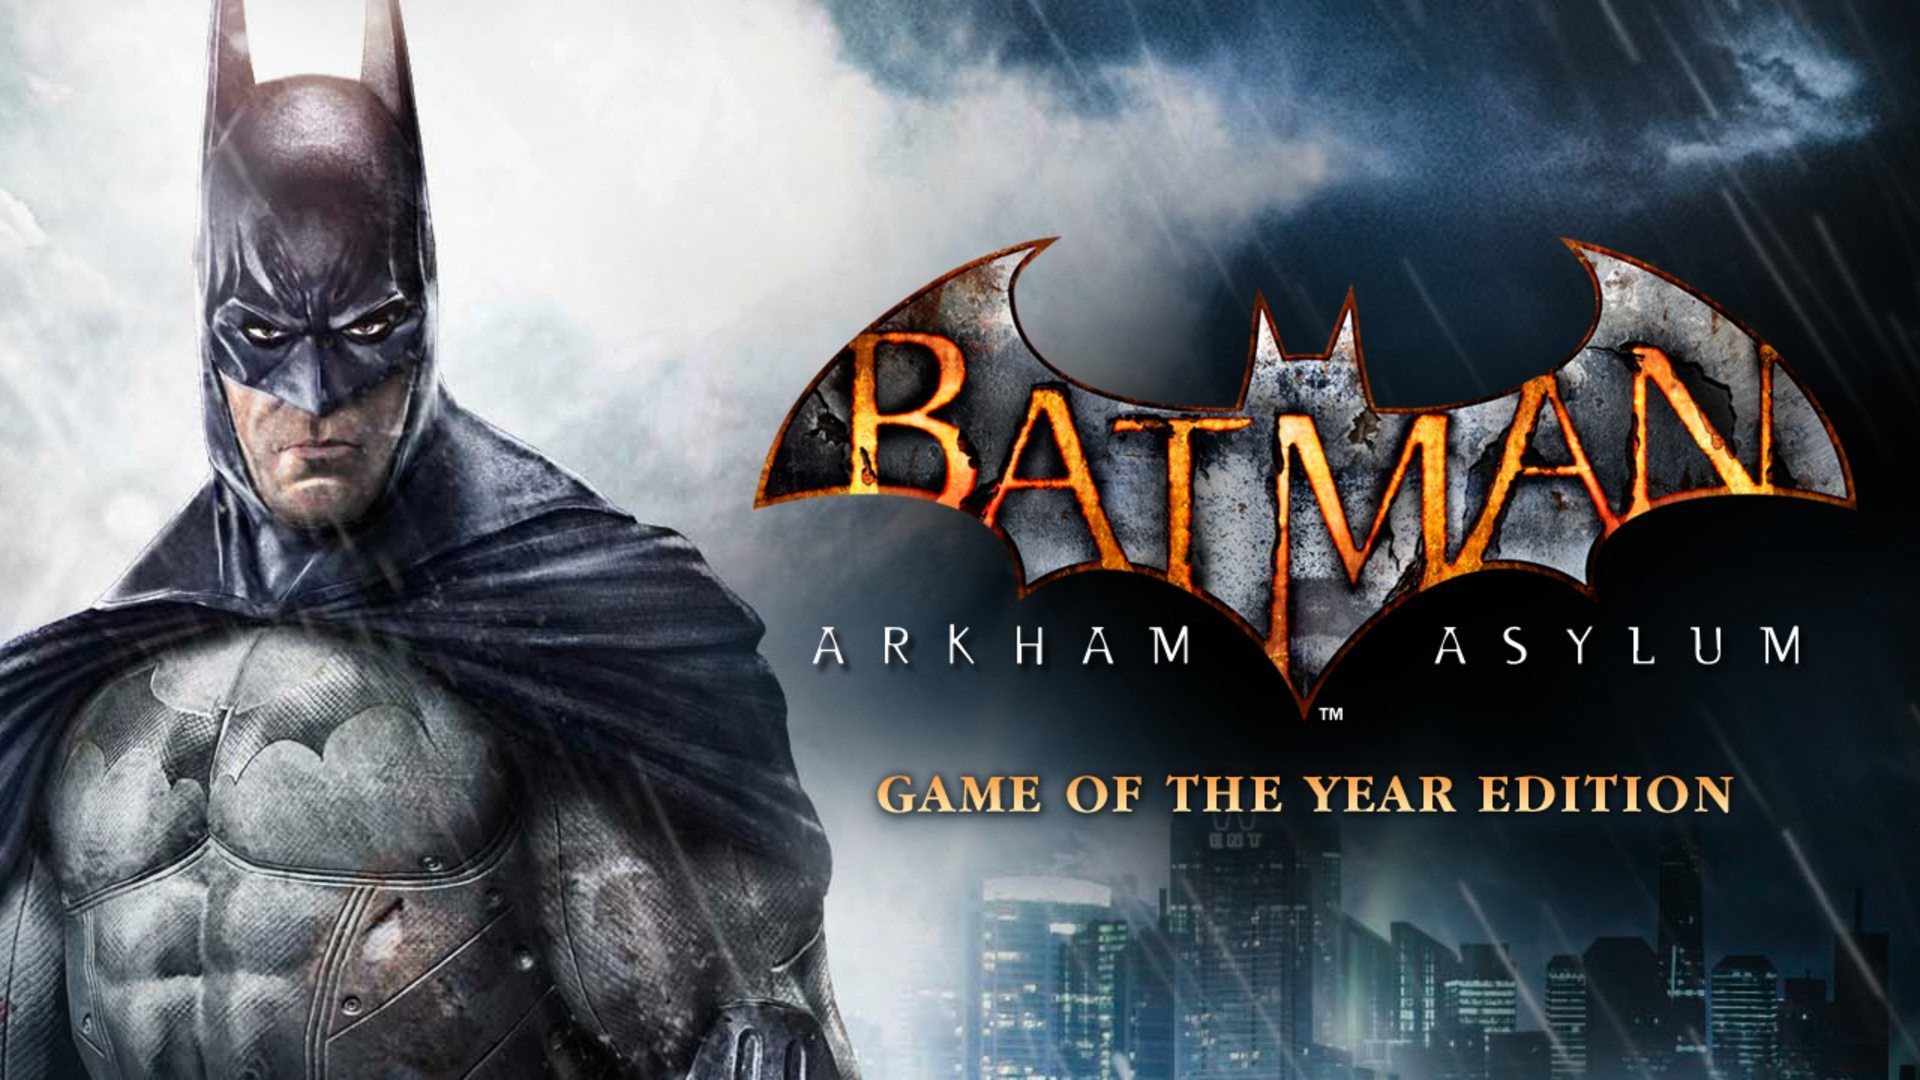 Arkham asylum game of the year edition. Batman Arkham Asylum GOTY Edition. Бэтмен 2009 Arkham Asylum. Бэтмен 2010 игра. Бэтмен Аркхем асилум Бэтмен.